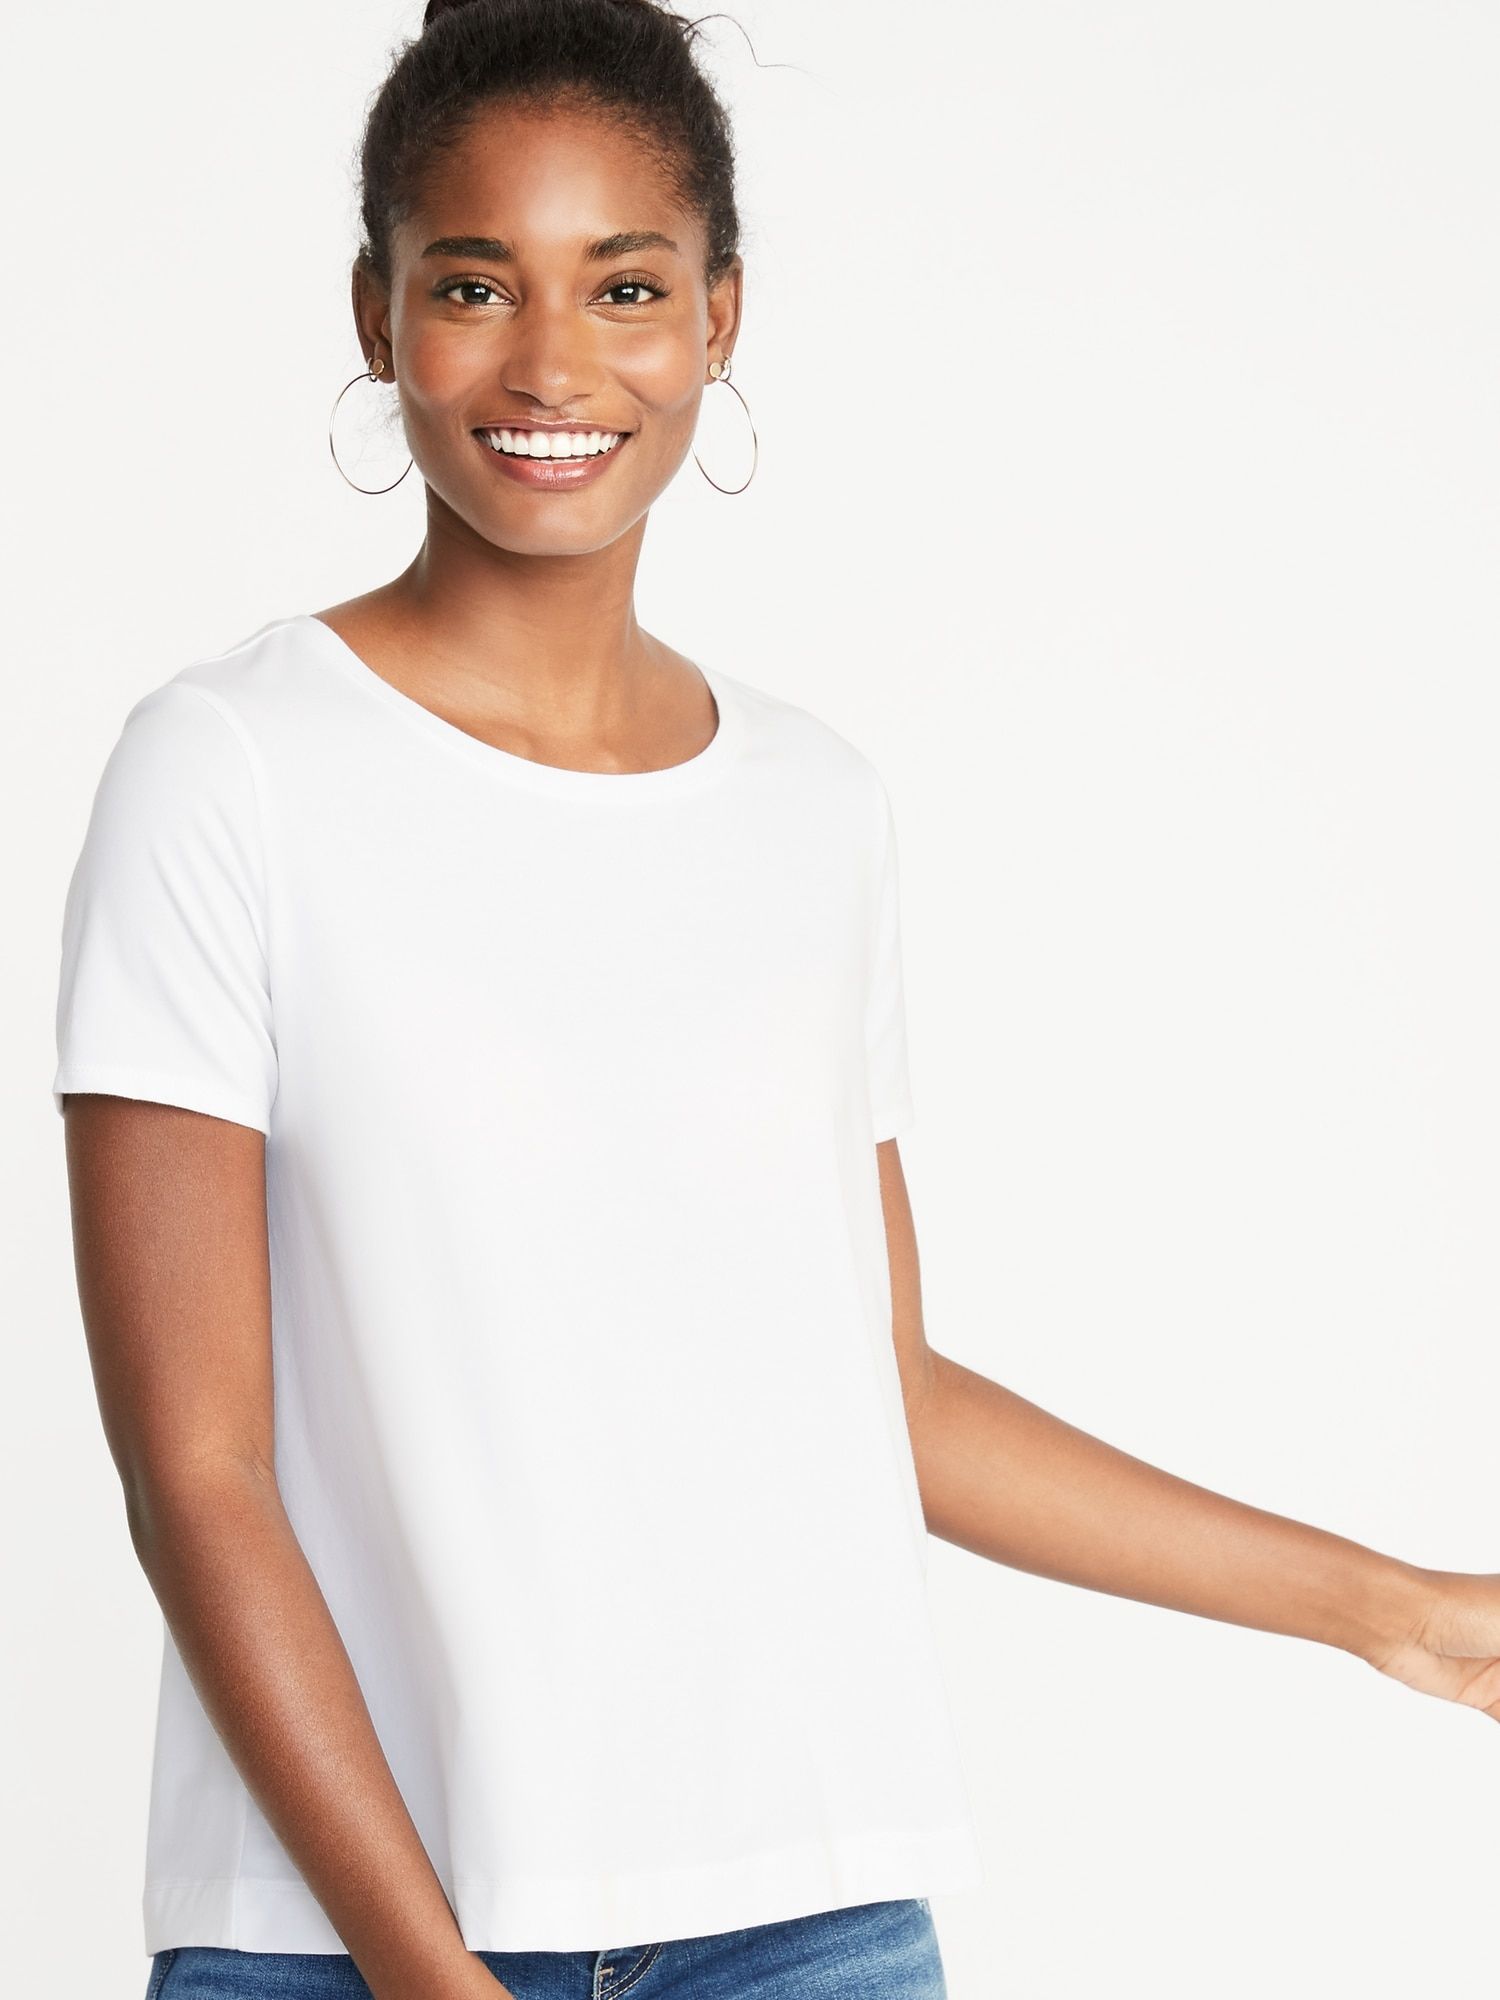 Buy > dressy white t shirt women's > in stock